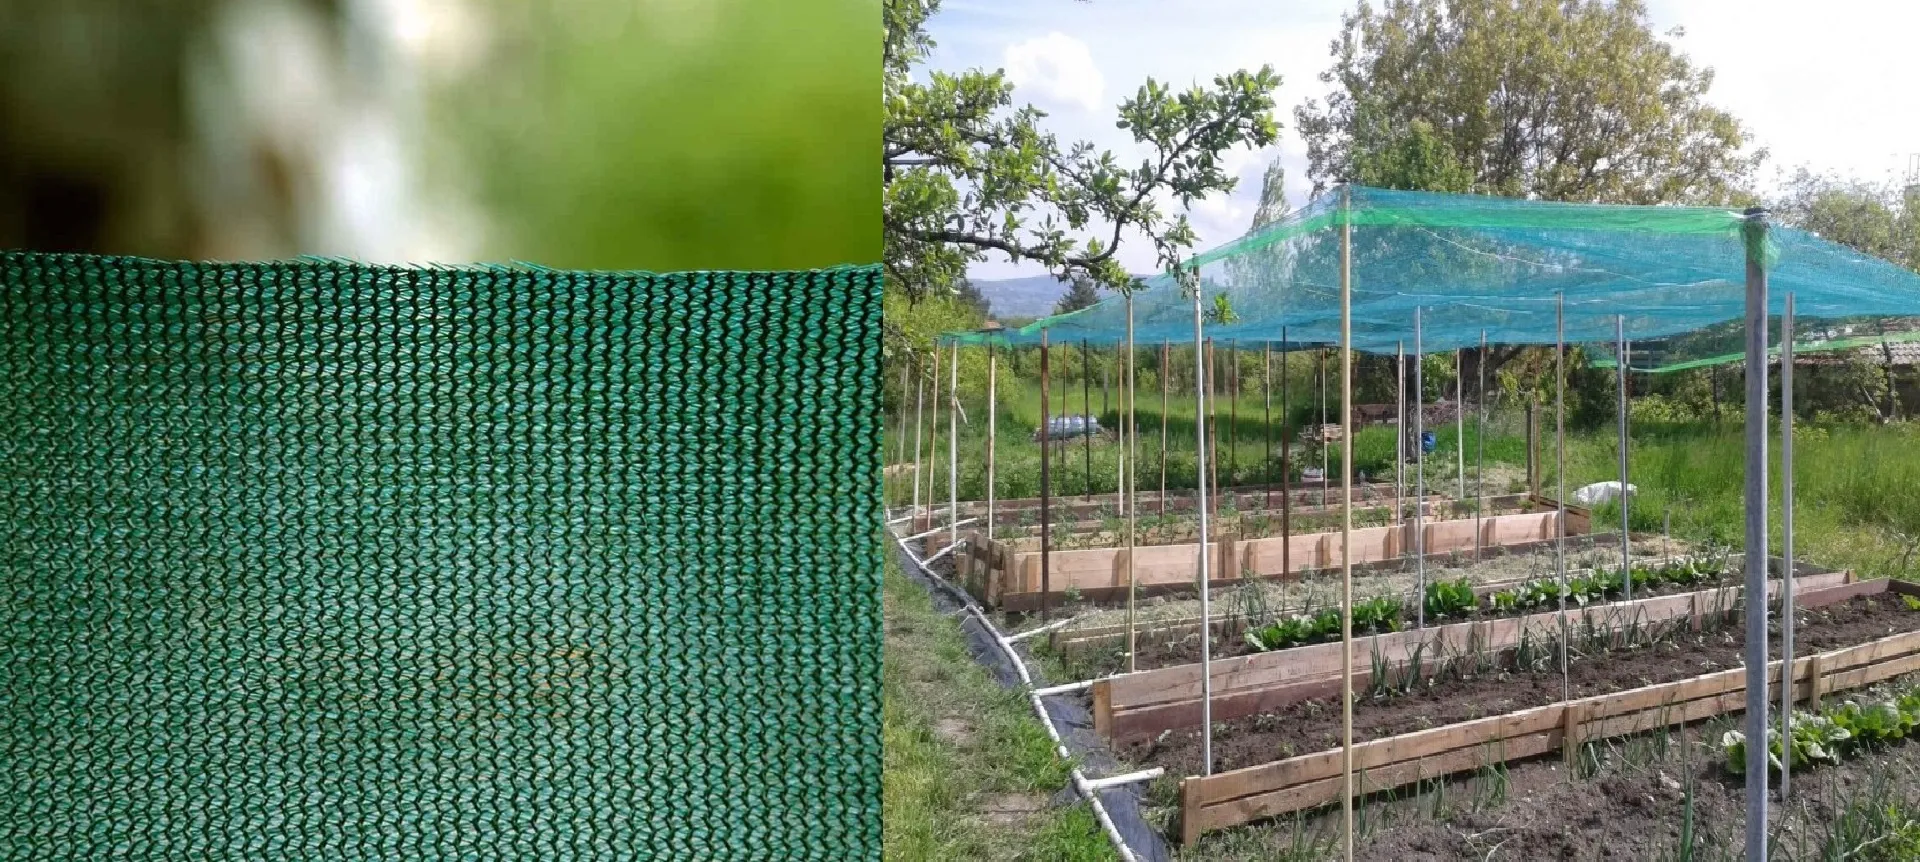 Зелени мрежи против градушка за земеделие и за засенчване на огради